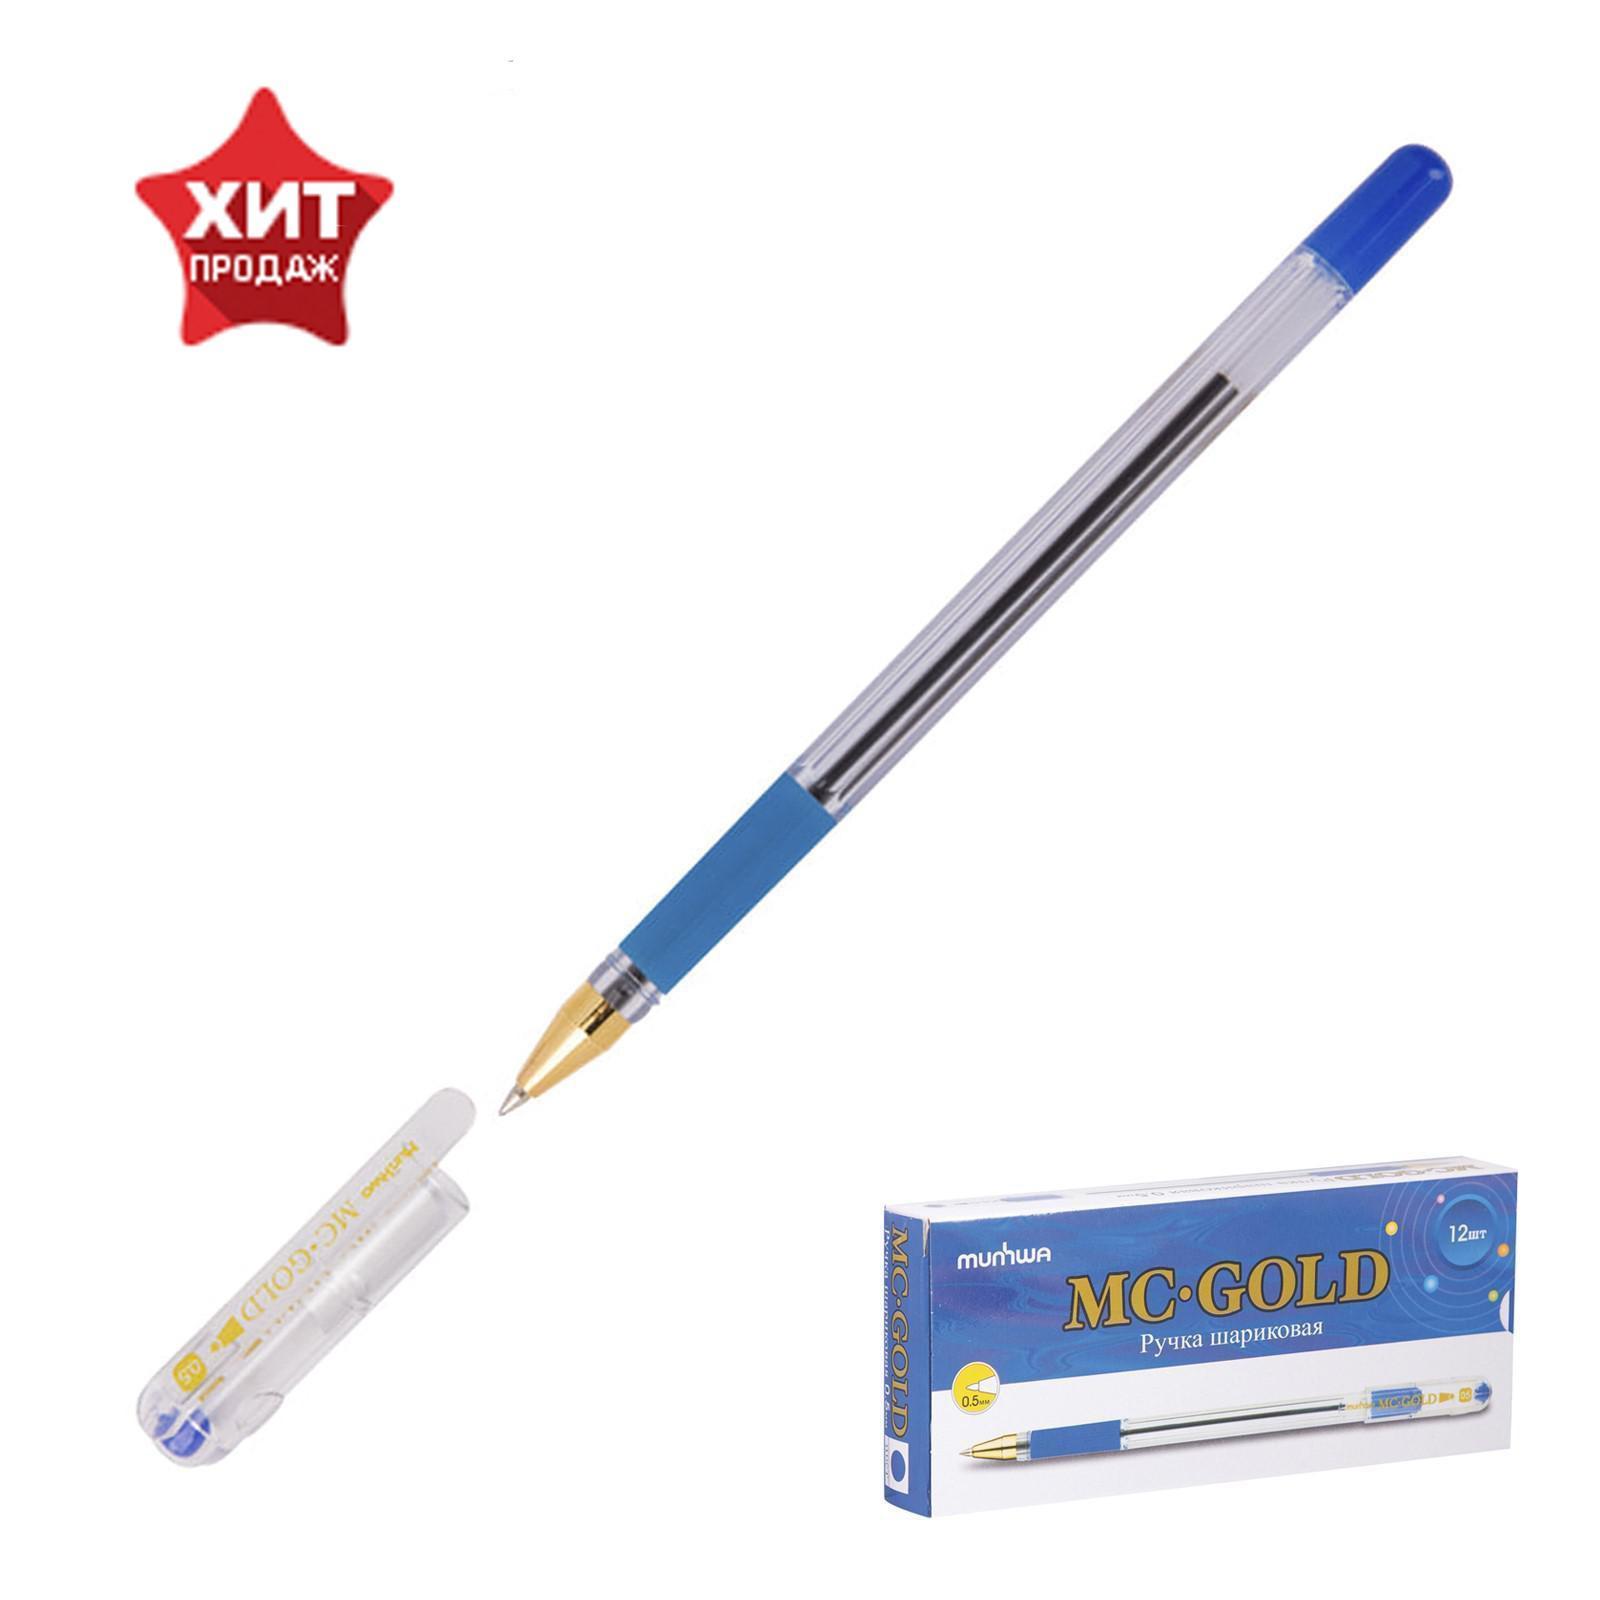 Mc gold ручка. MUNHWA ручка шариковая MC Gold. Ручка шариковая MUNHWA MC Gold синяя 0.5мм. Ручка шариковая MUNHWA MC Gold узел 0.5 мм. Ручка MUNHWA MC Gold 0.5 голубая.